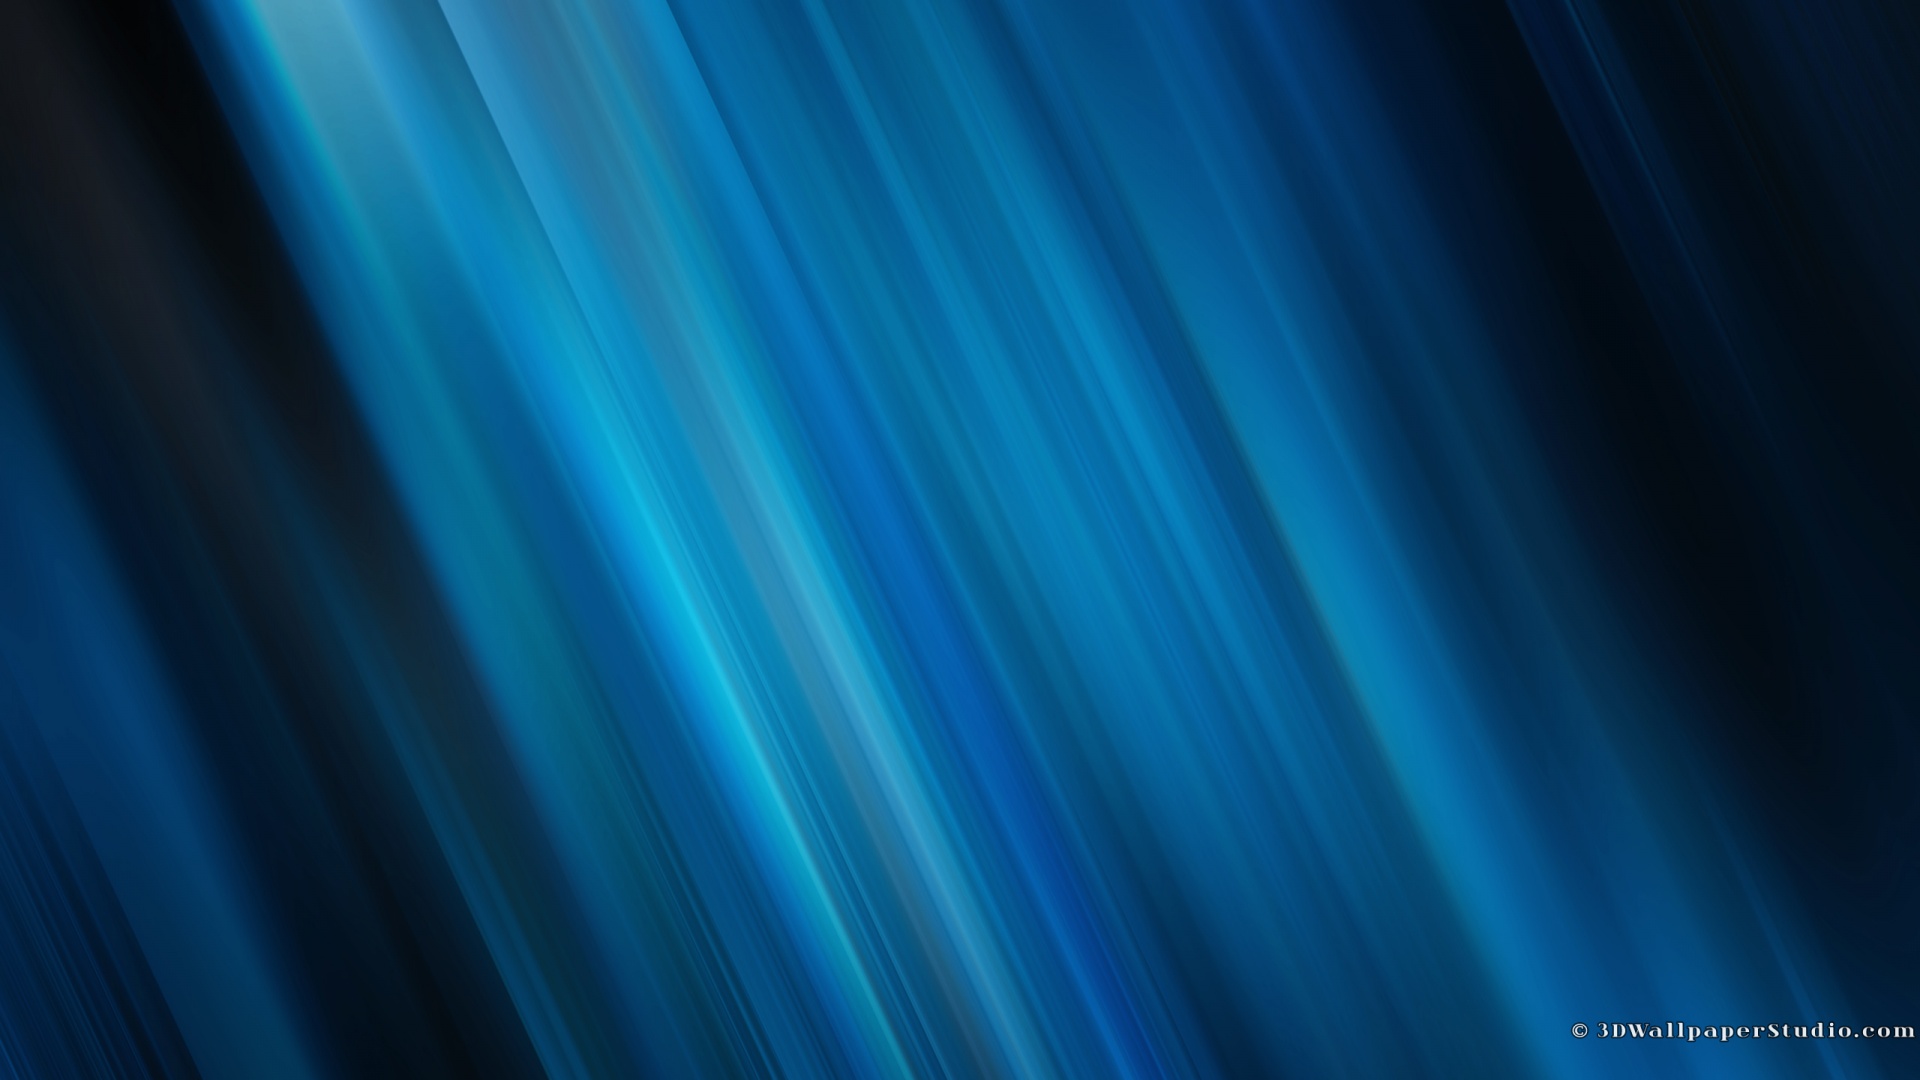 Cool blue light wallpaper in 1920x1080 screen resolution